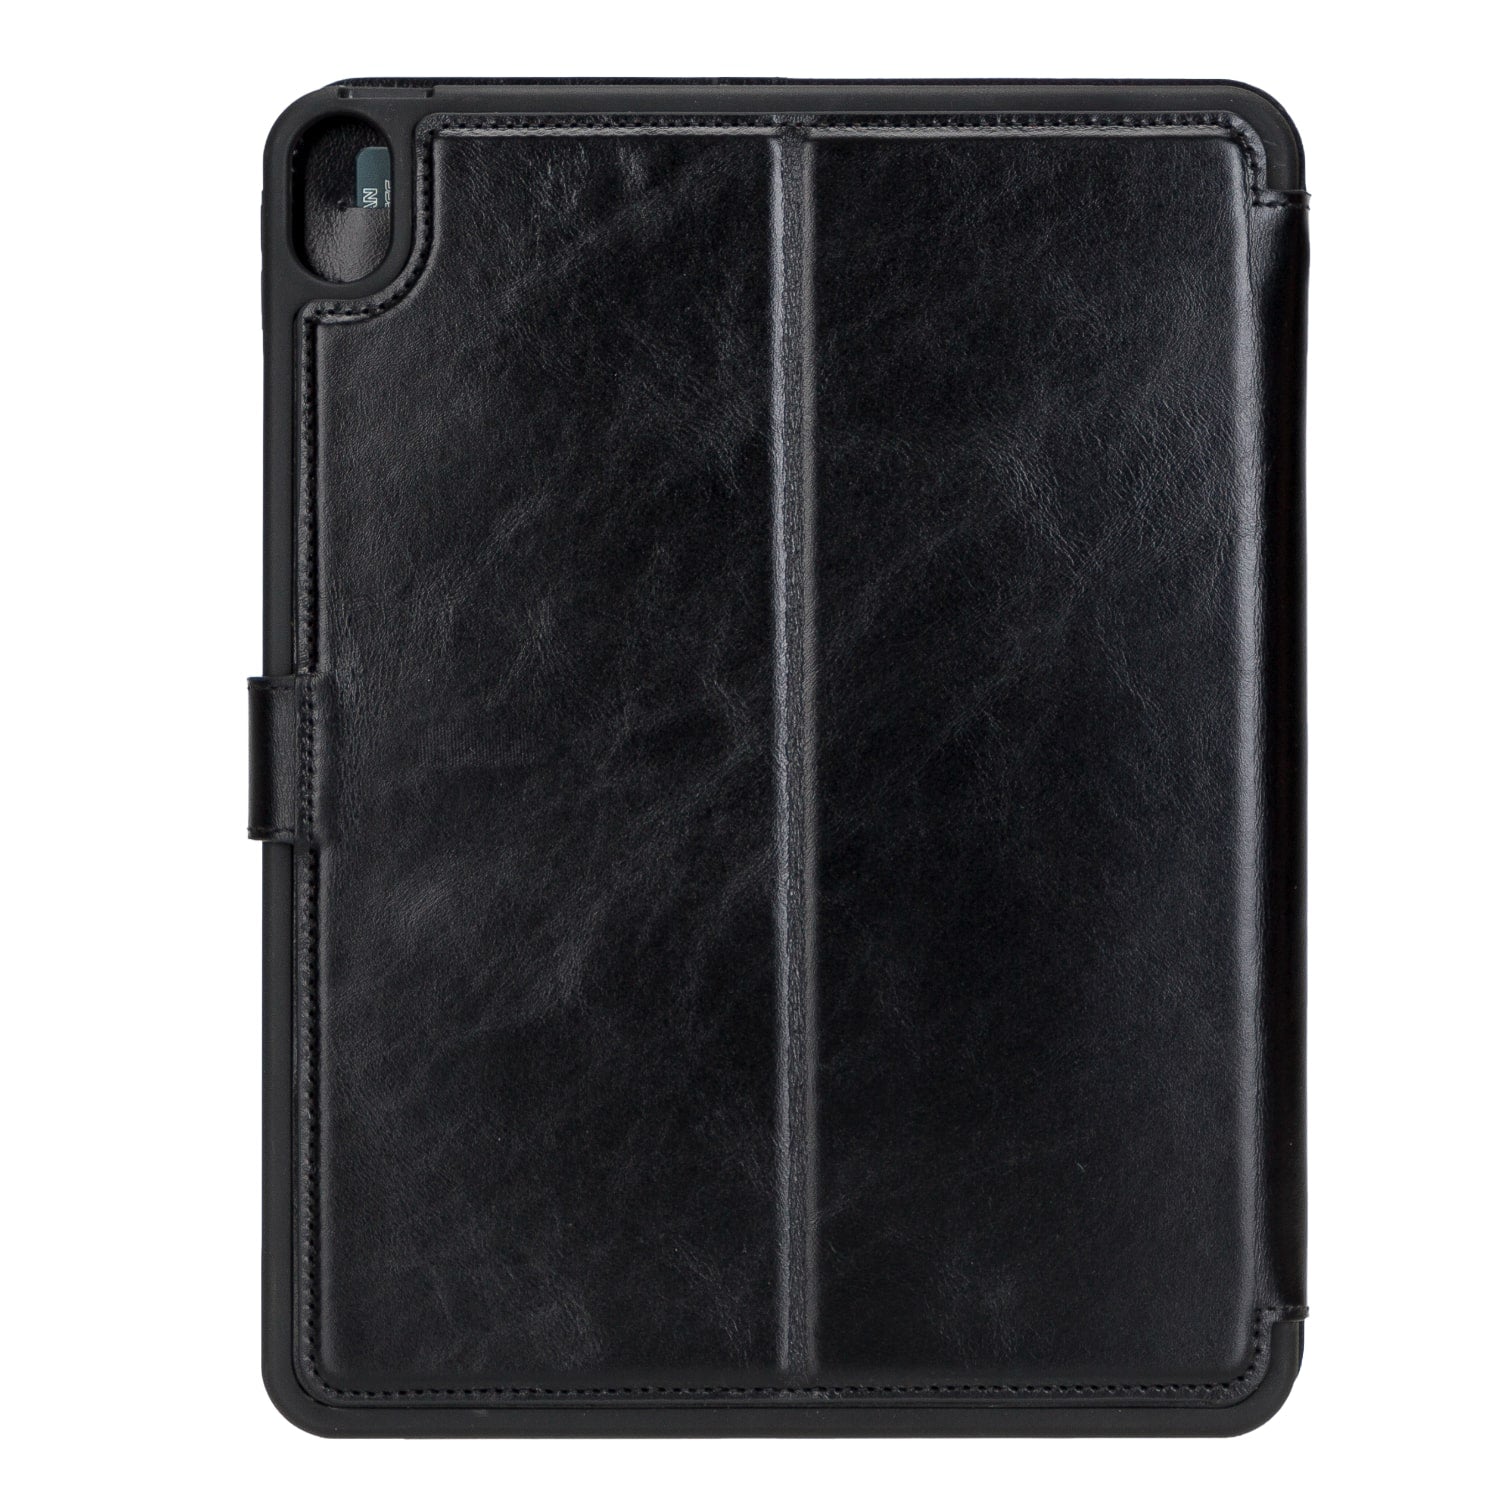 Black Leather iPad Air 10.9 Inc Smart Folio Case with Apple Pen Holder - Bomonti - 4